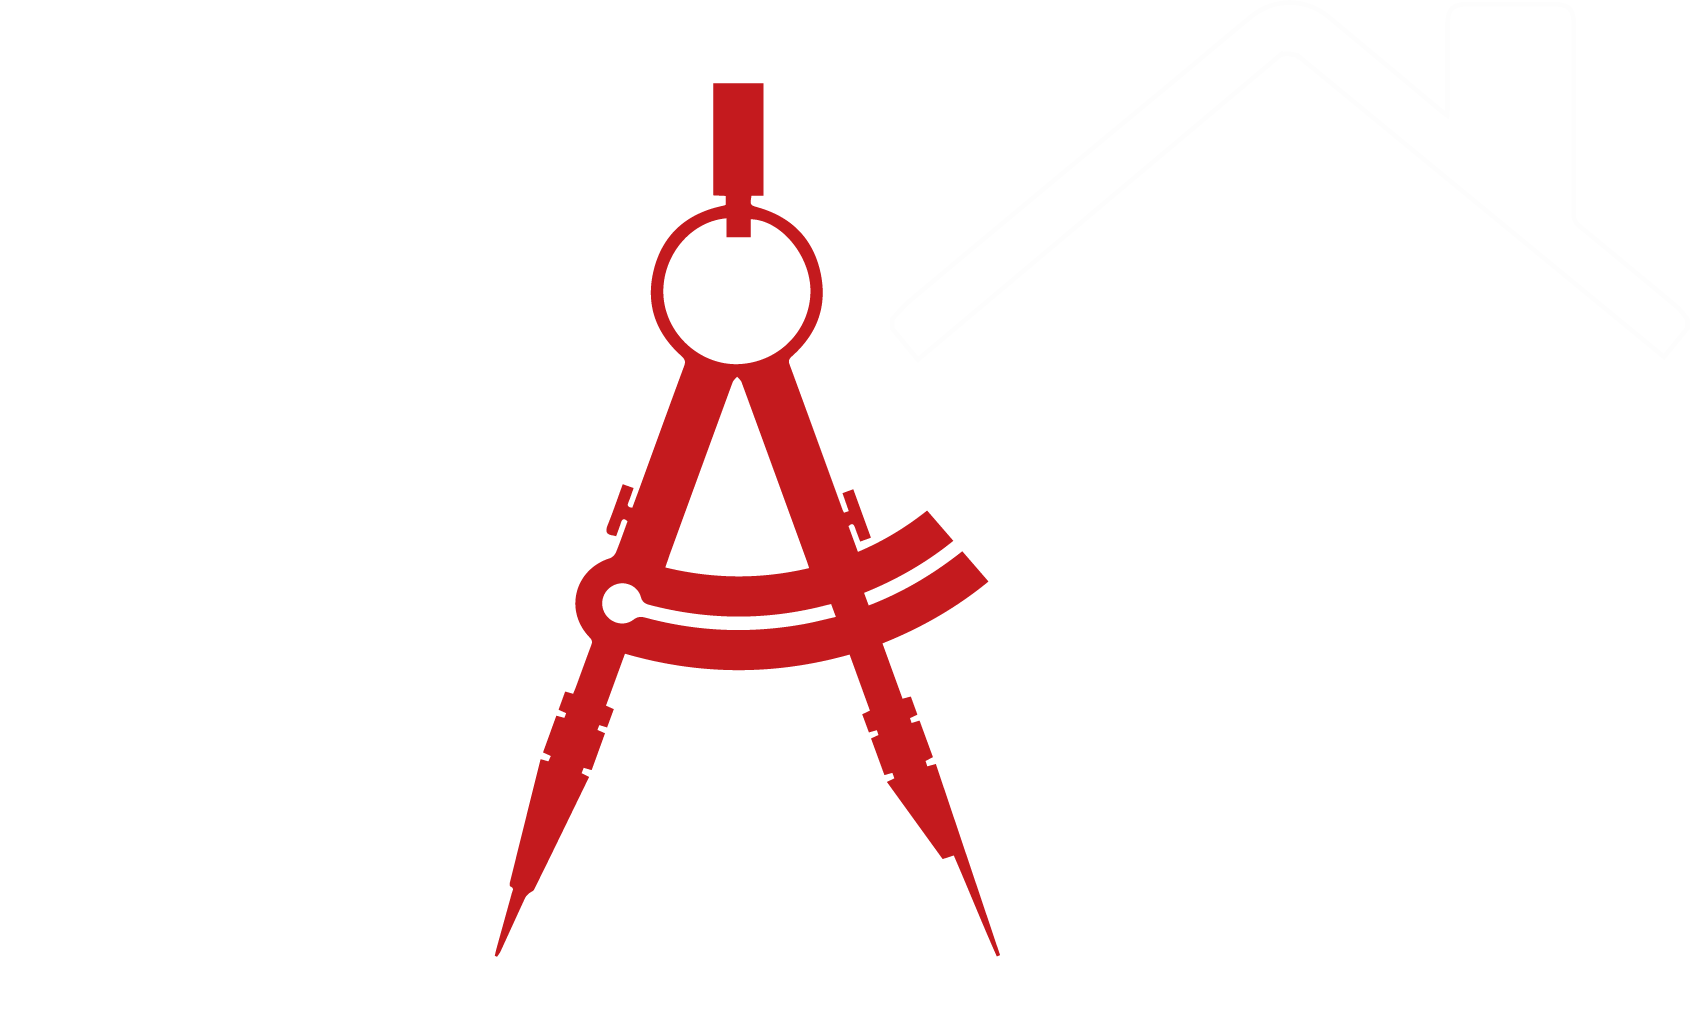 Space architects Pvt Ltd.